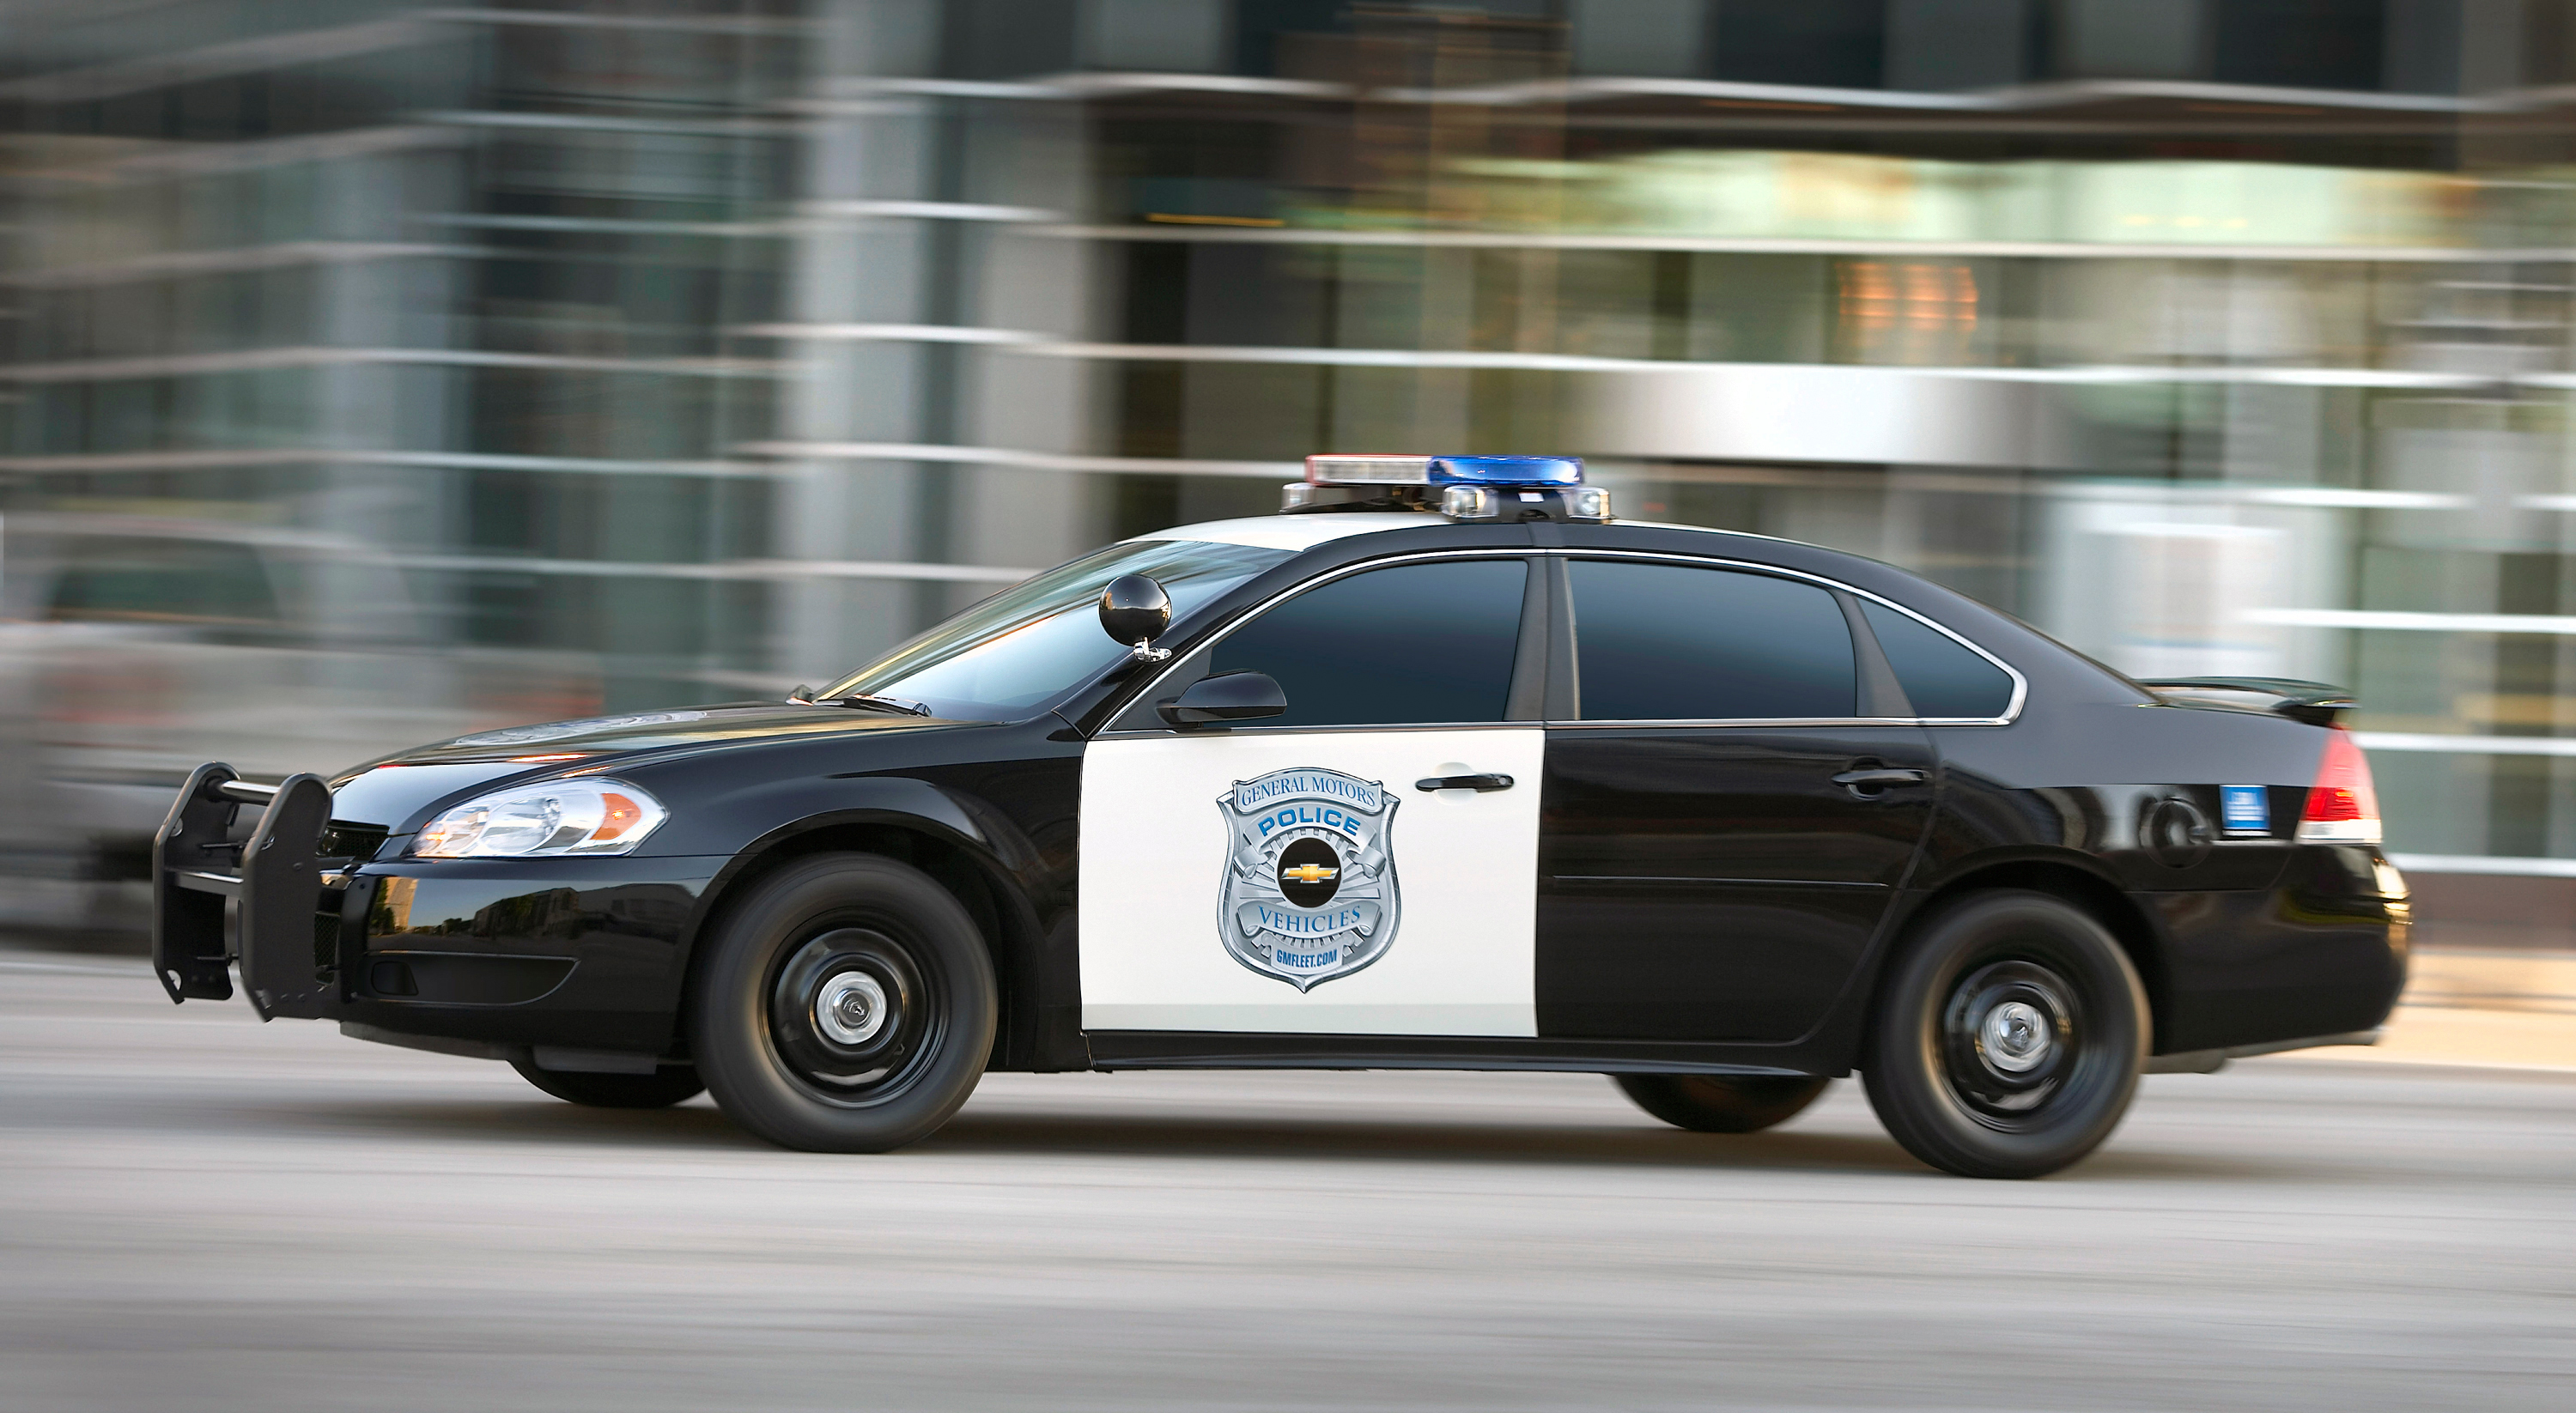 Покажи картинки полицейских. Шевроле каприз 2011 полиция. Chevrolet Caprice 2020 Police. Chevrolet Caprice 9c1 и PPV.. Chevrolet Caprice Police Interceptor.